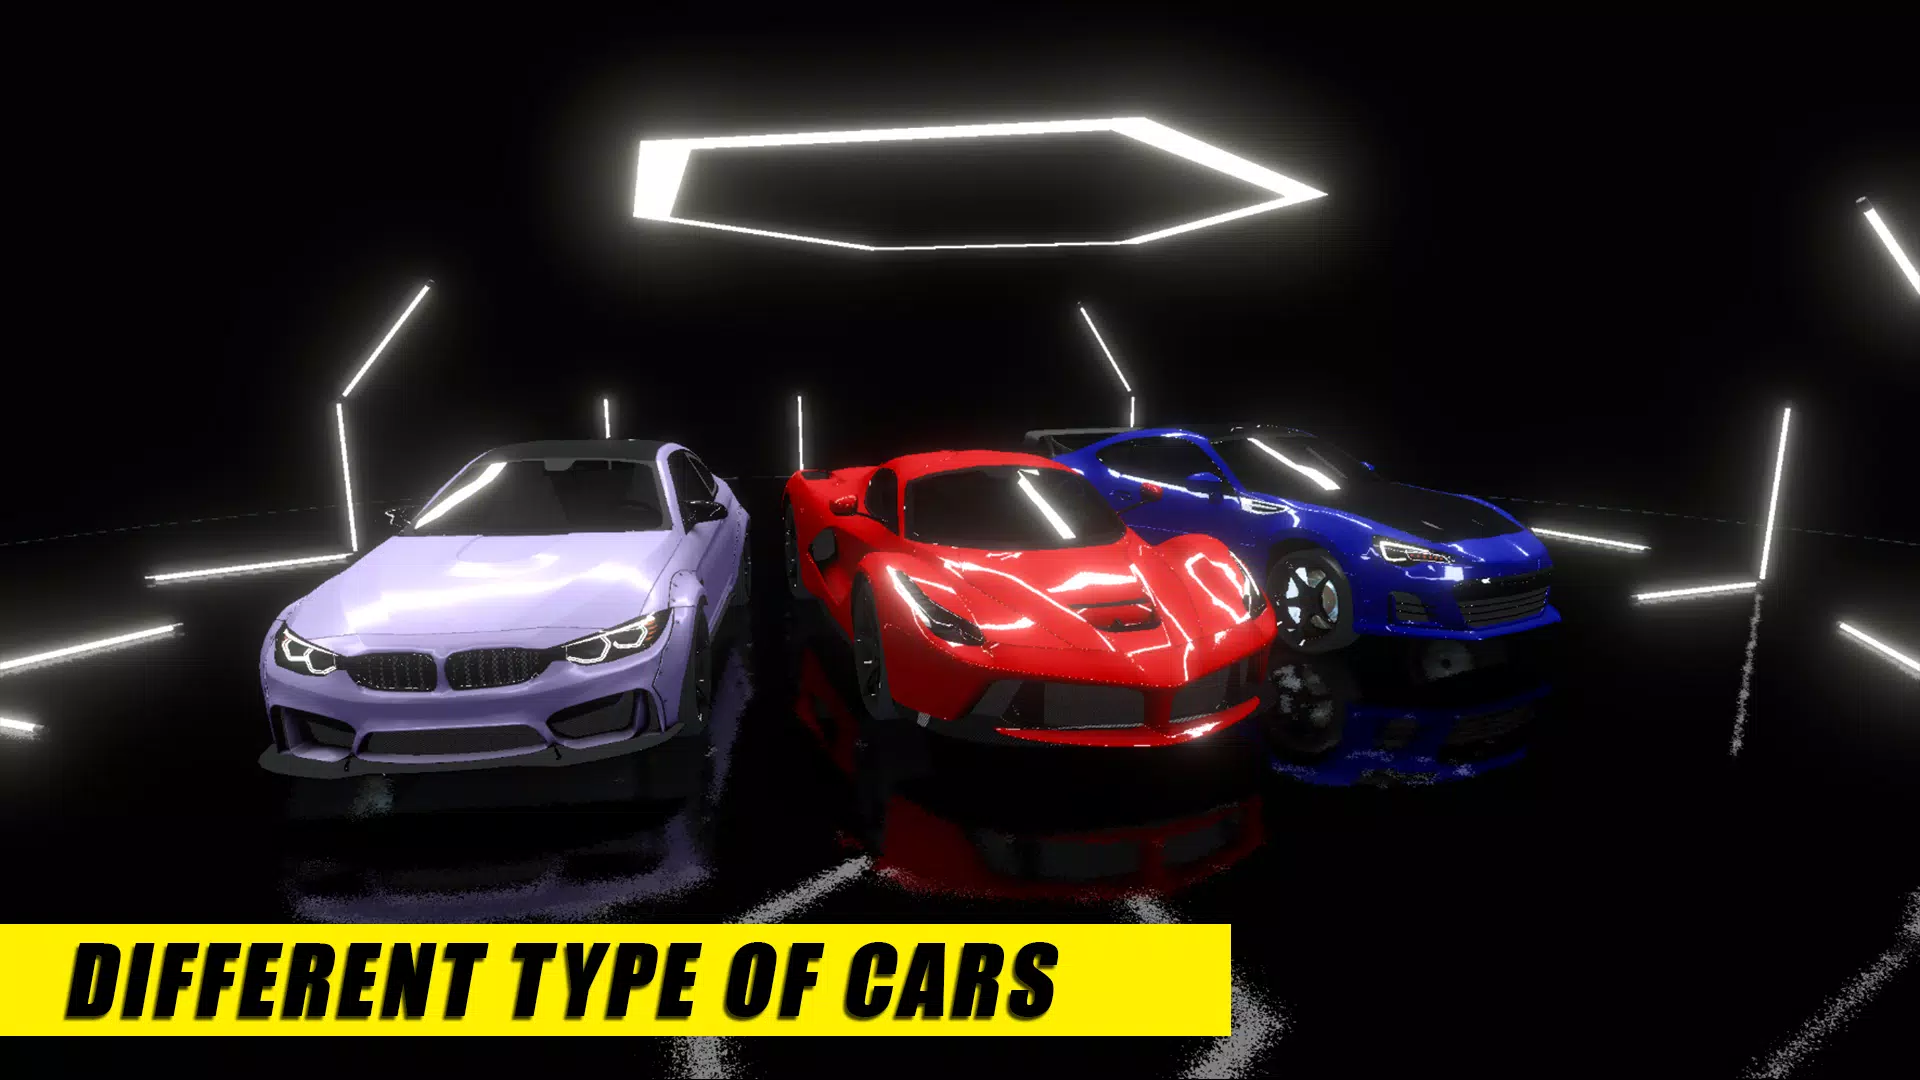 Real Drift Car Racing Free APK para Android - Download